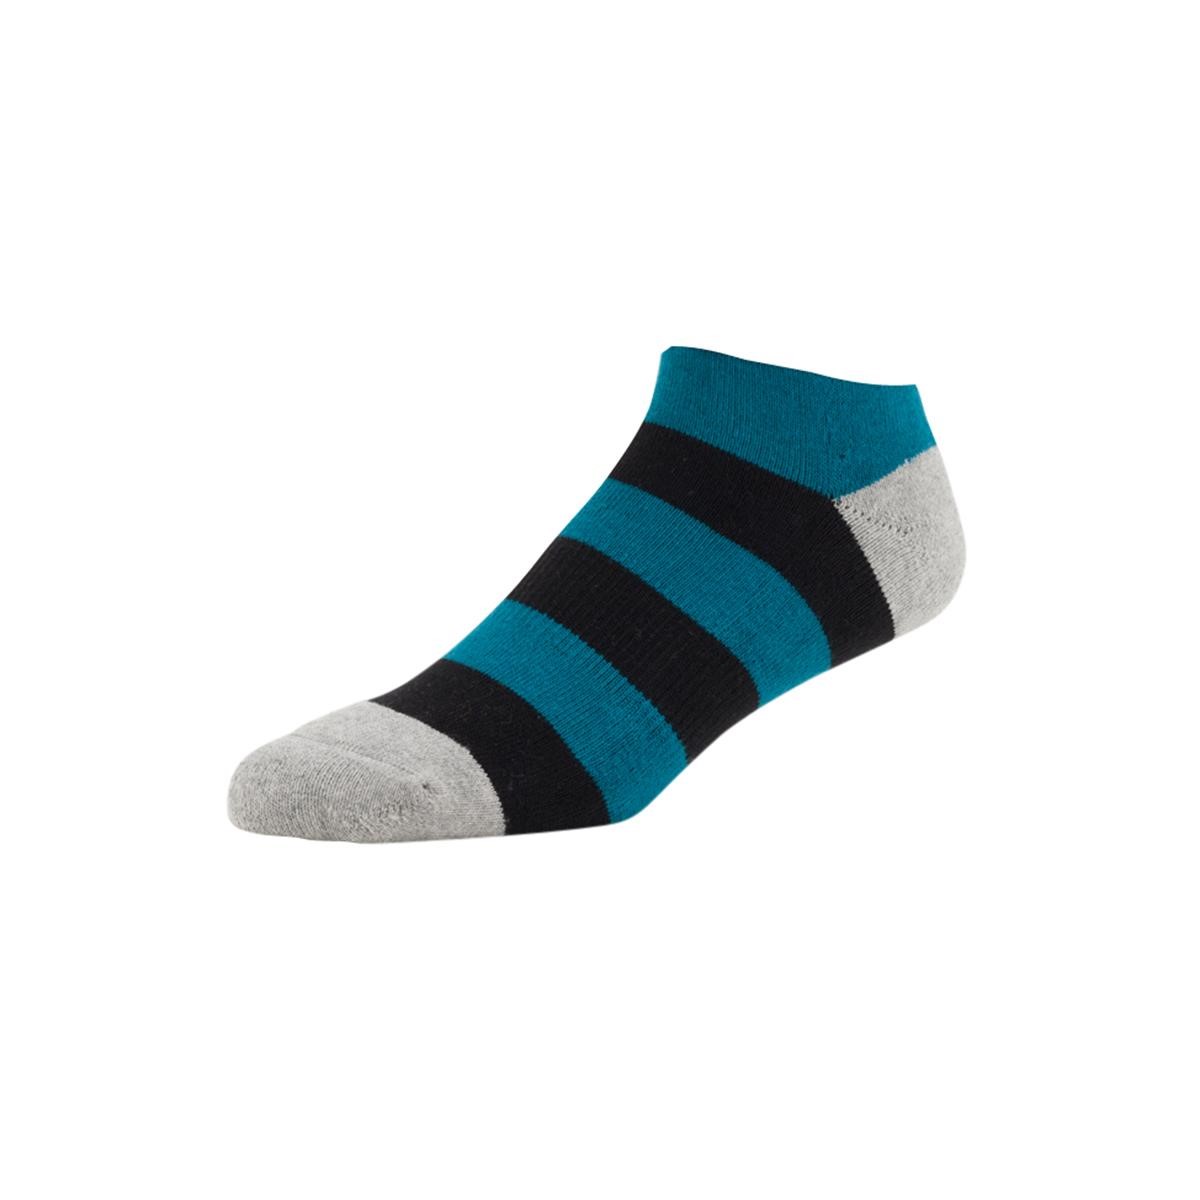 Freizeit/Streetwear Bekleidung-Socken/Strümpfe/Strumpfhosen - Stance Socken Bowery Blue, Low